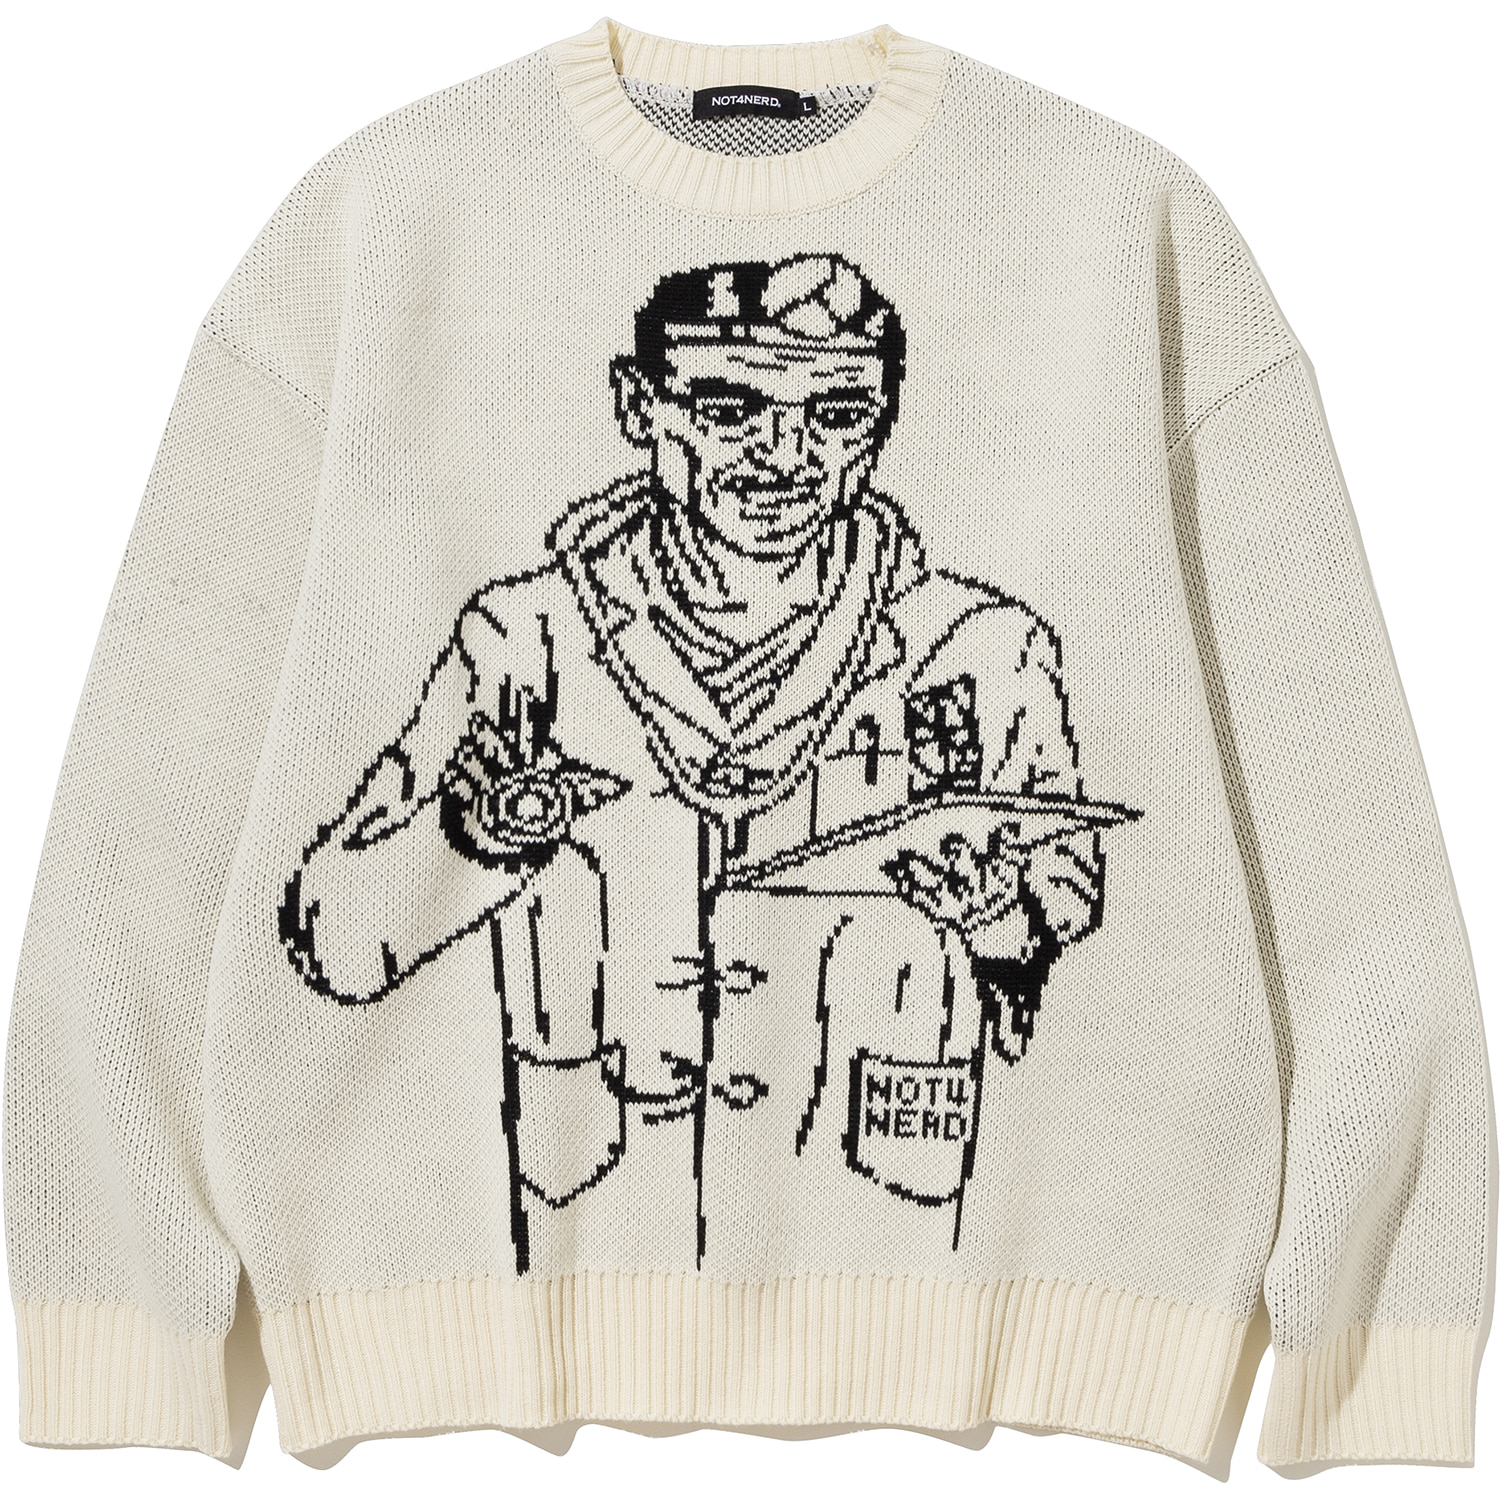 Doctor Knit Sweater - Ivory,NOT4NERD